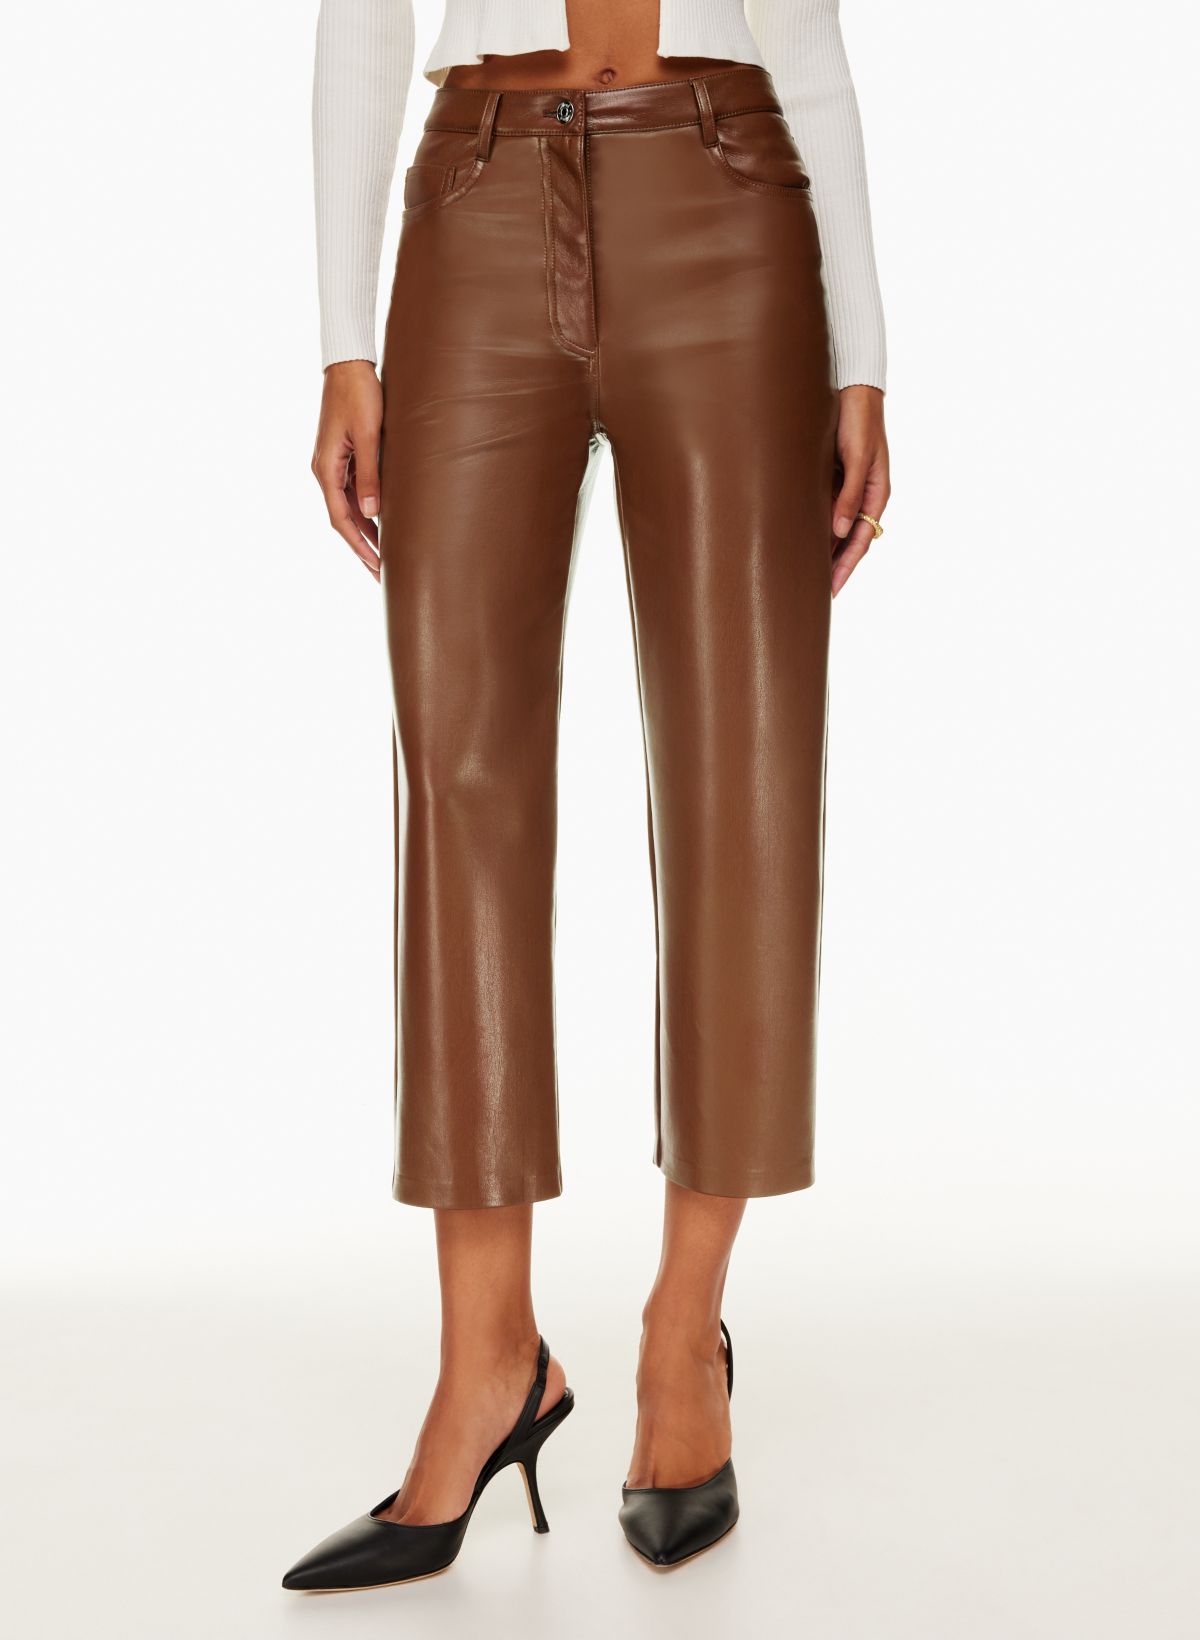 THE MELINA™ PANT  Leather pants, Leather pants style, Melina pant